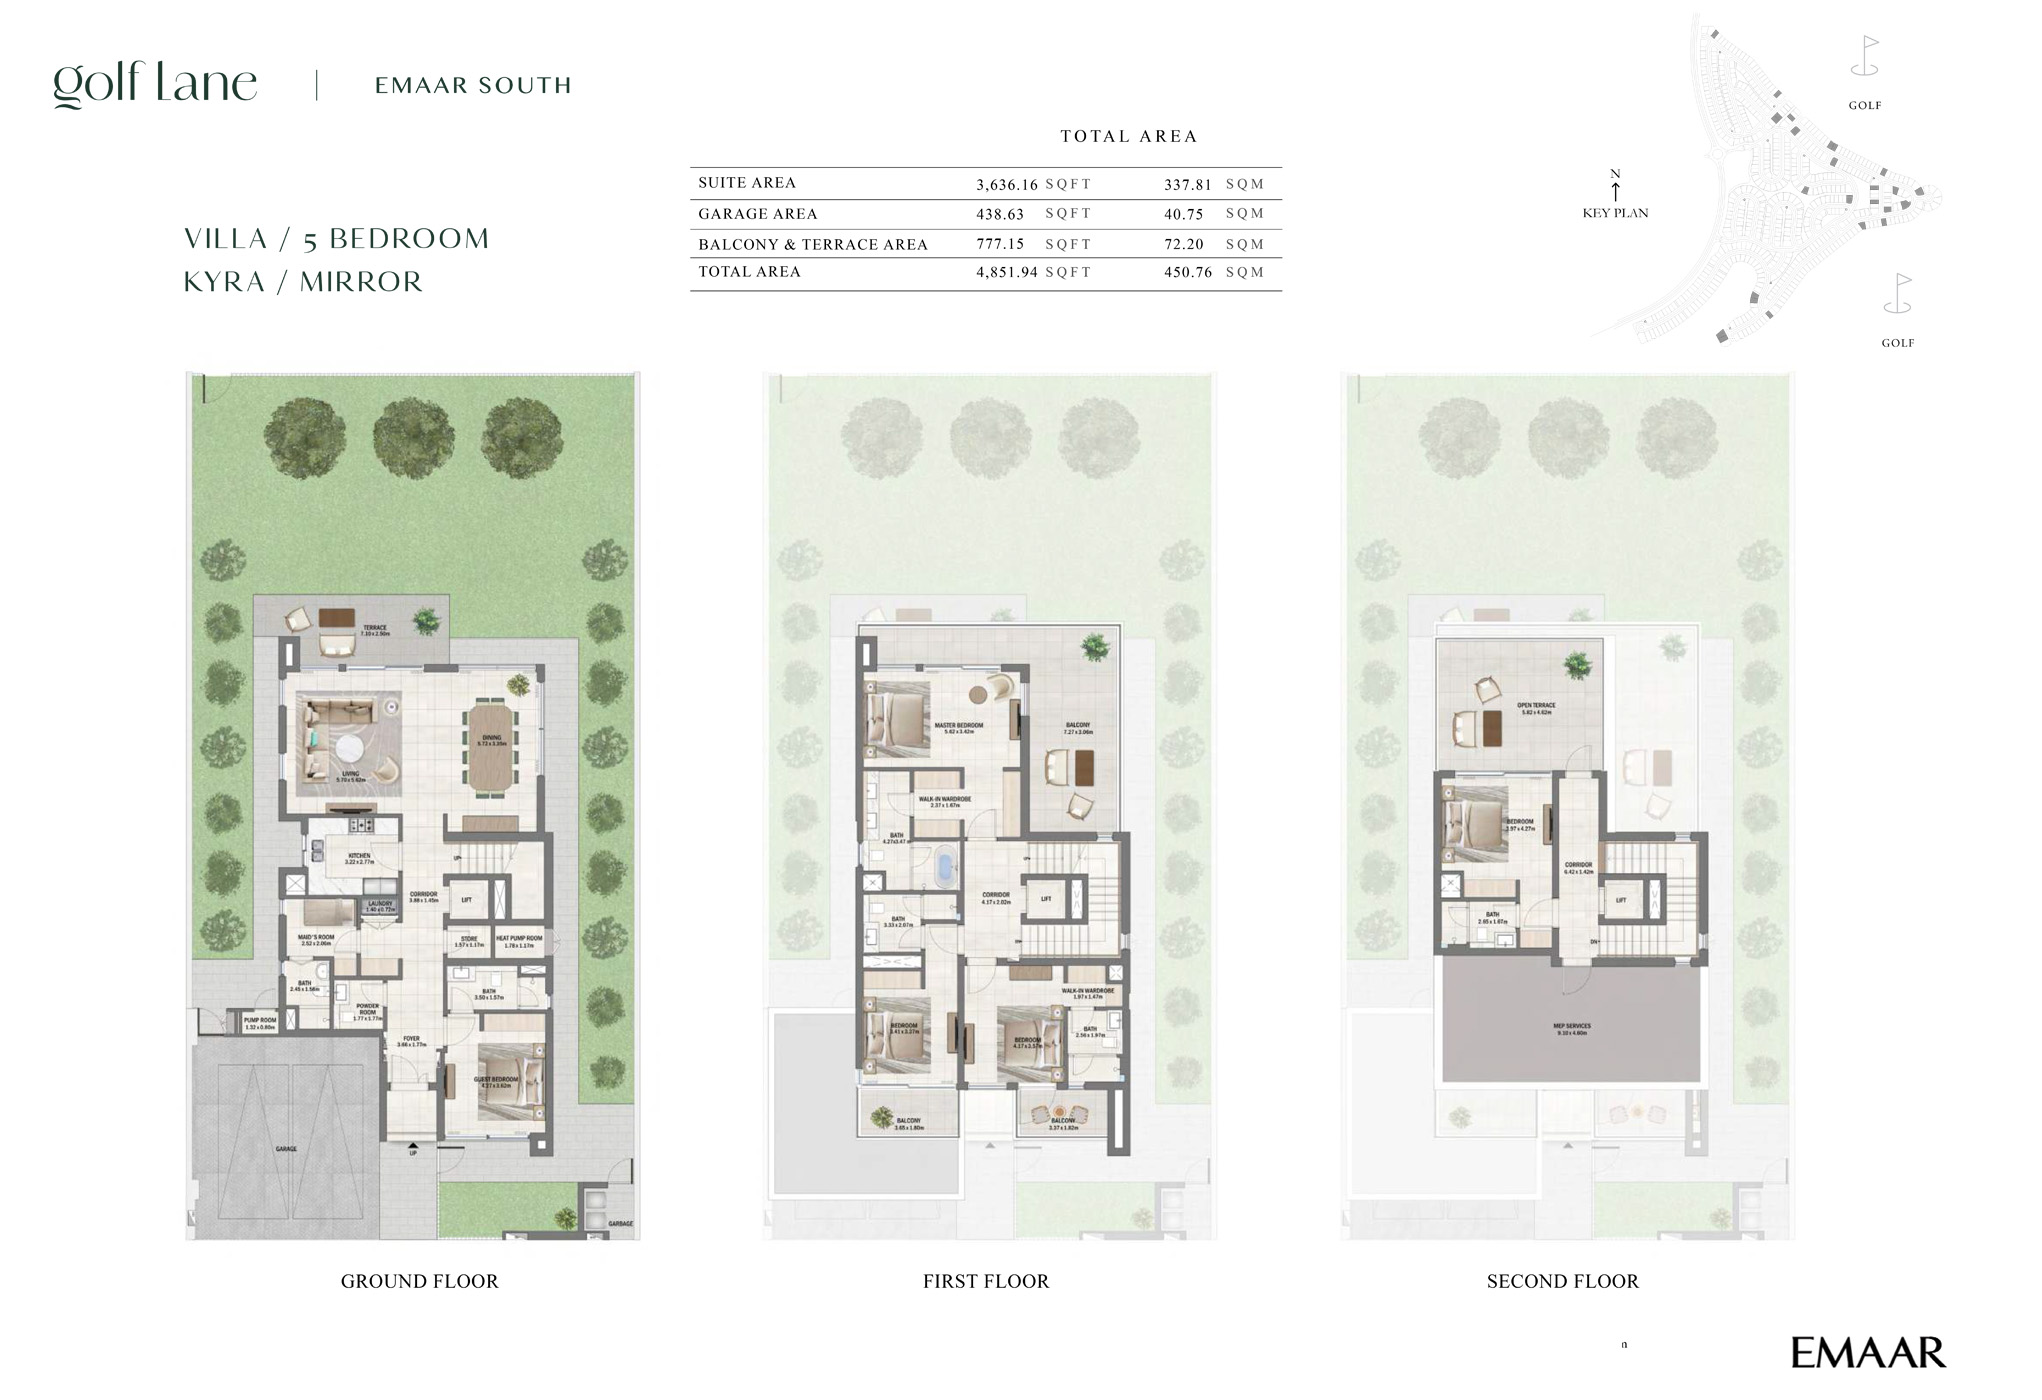 5 Bedroom Villas Floor Plan